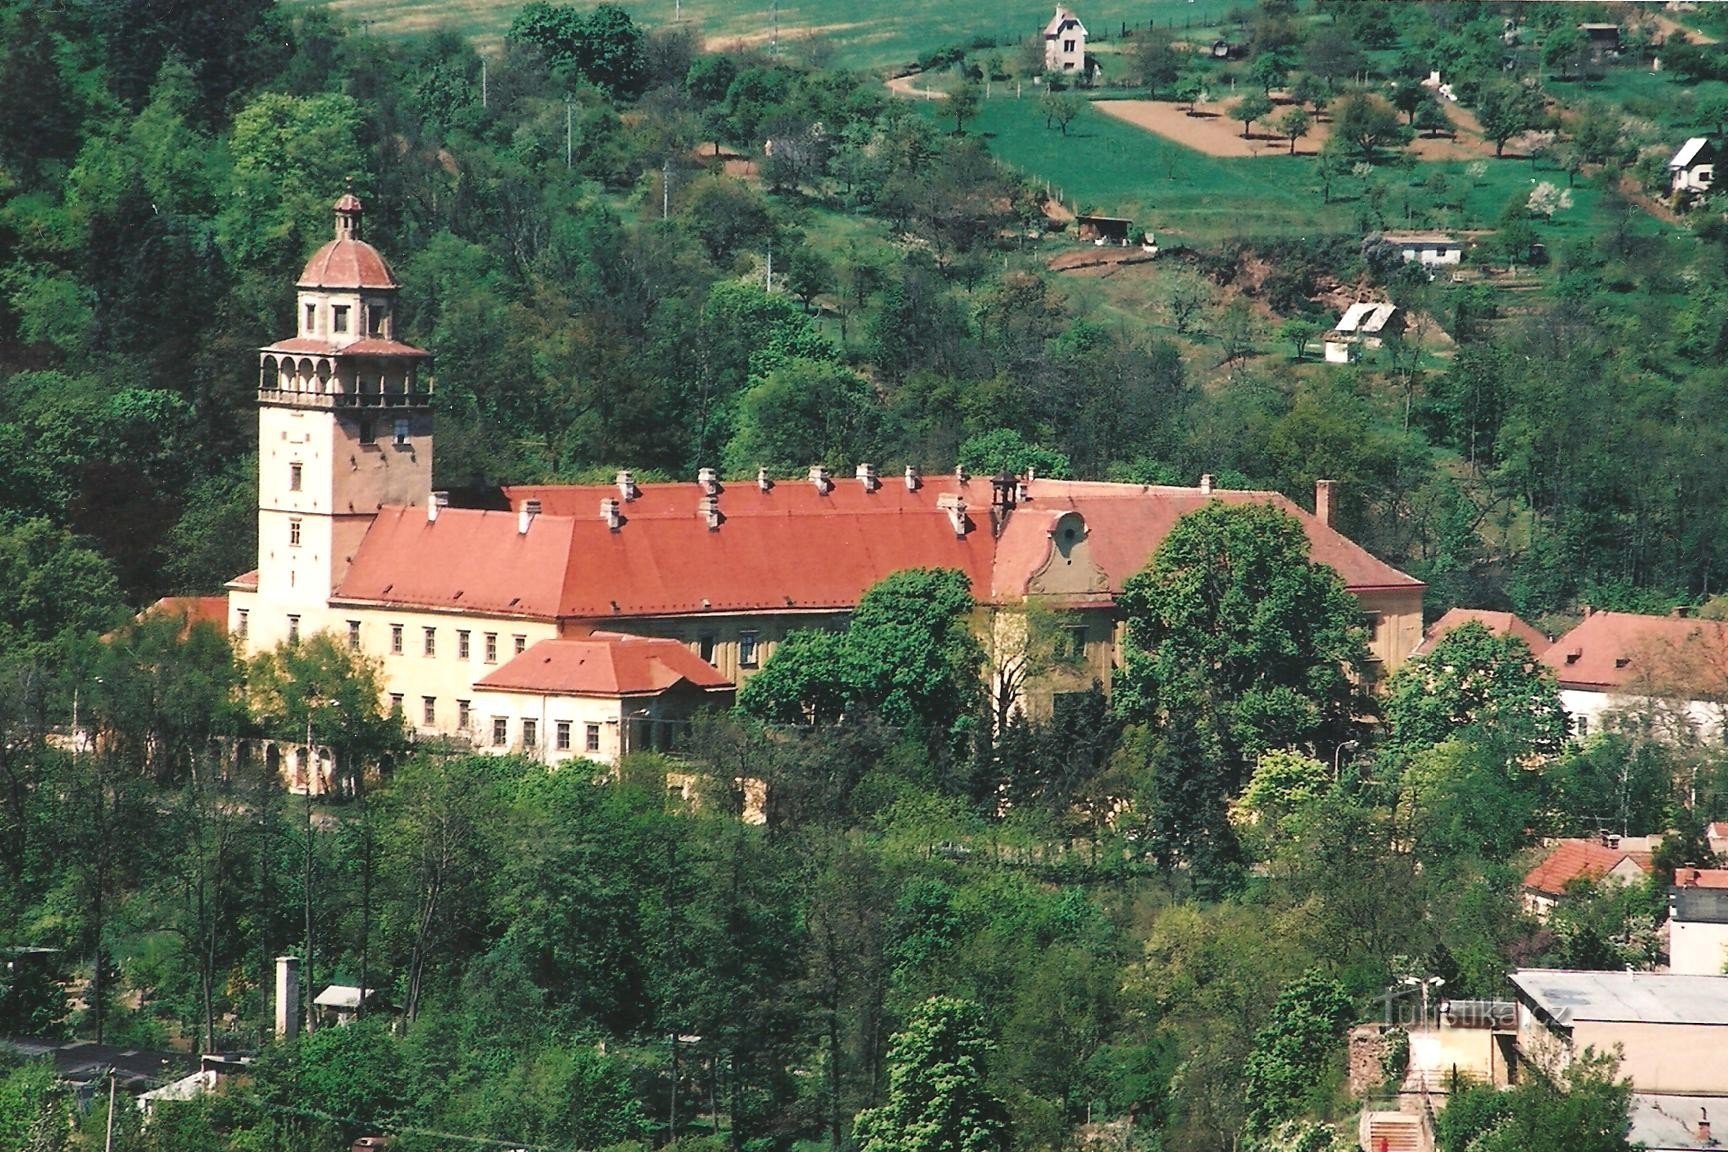 Moravskokrumlov castle